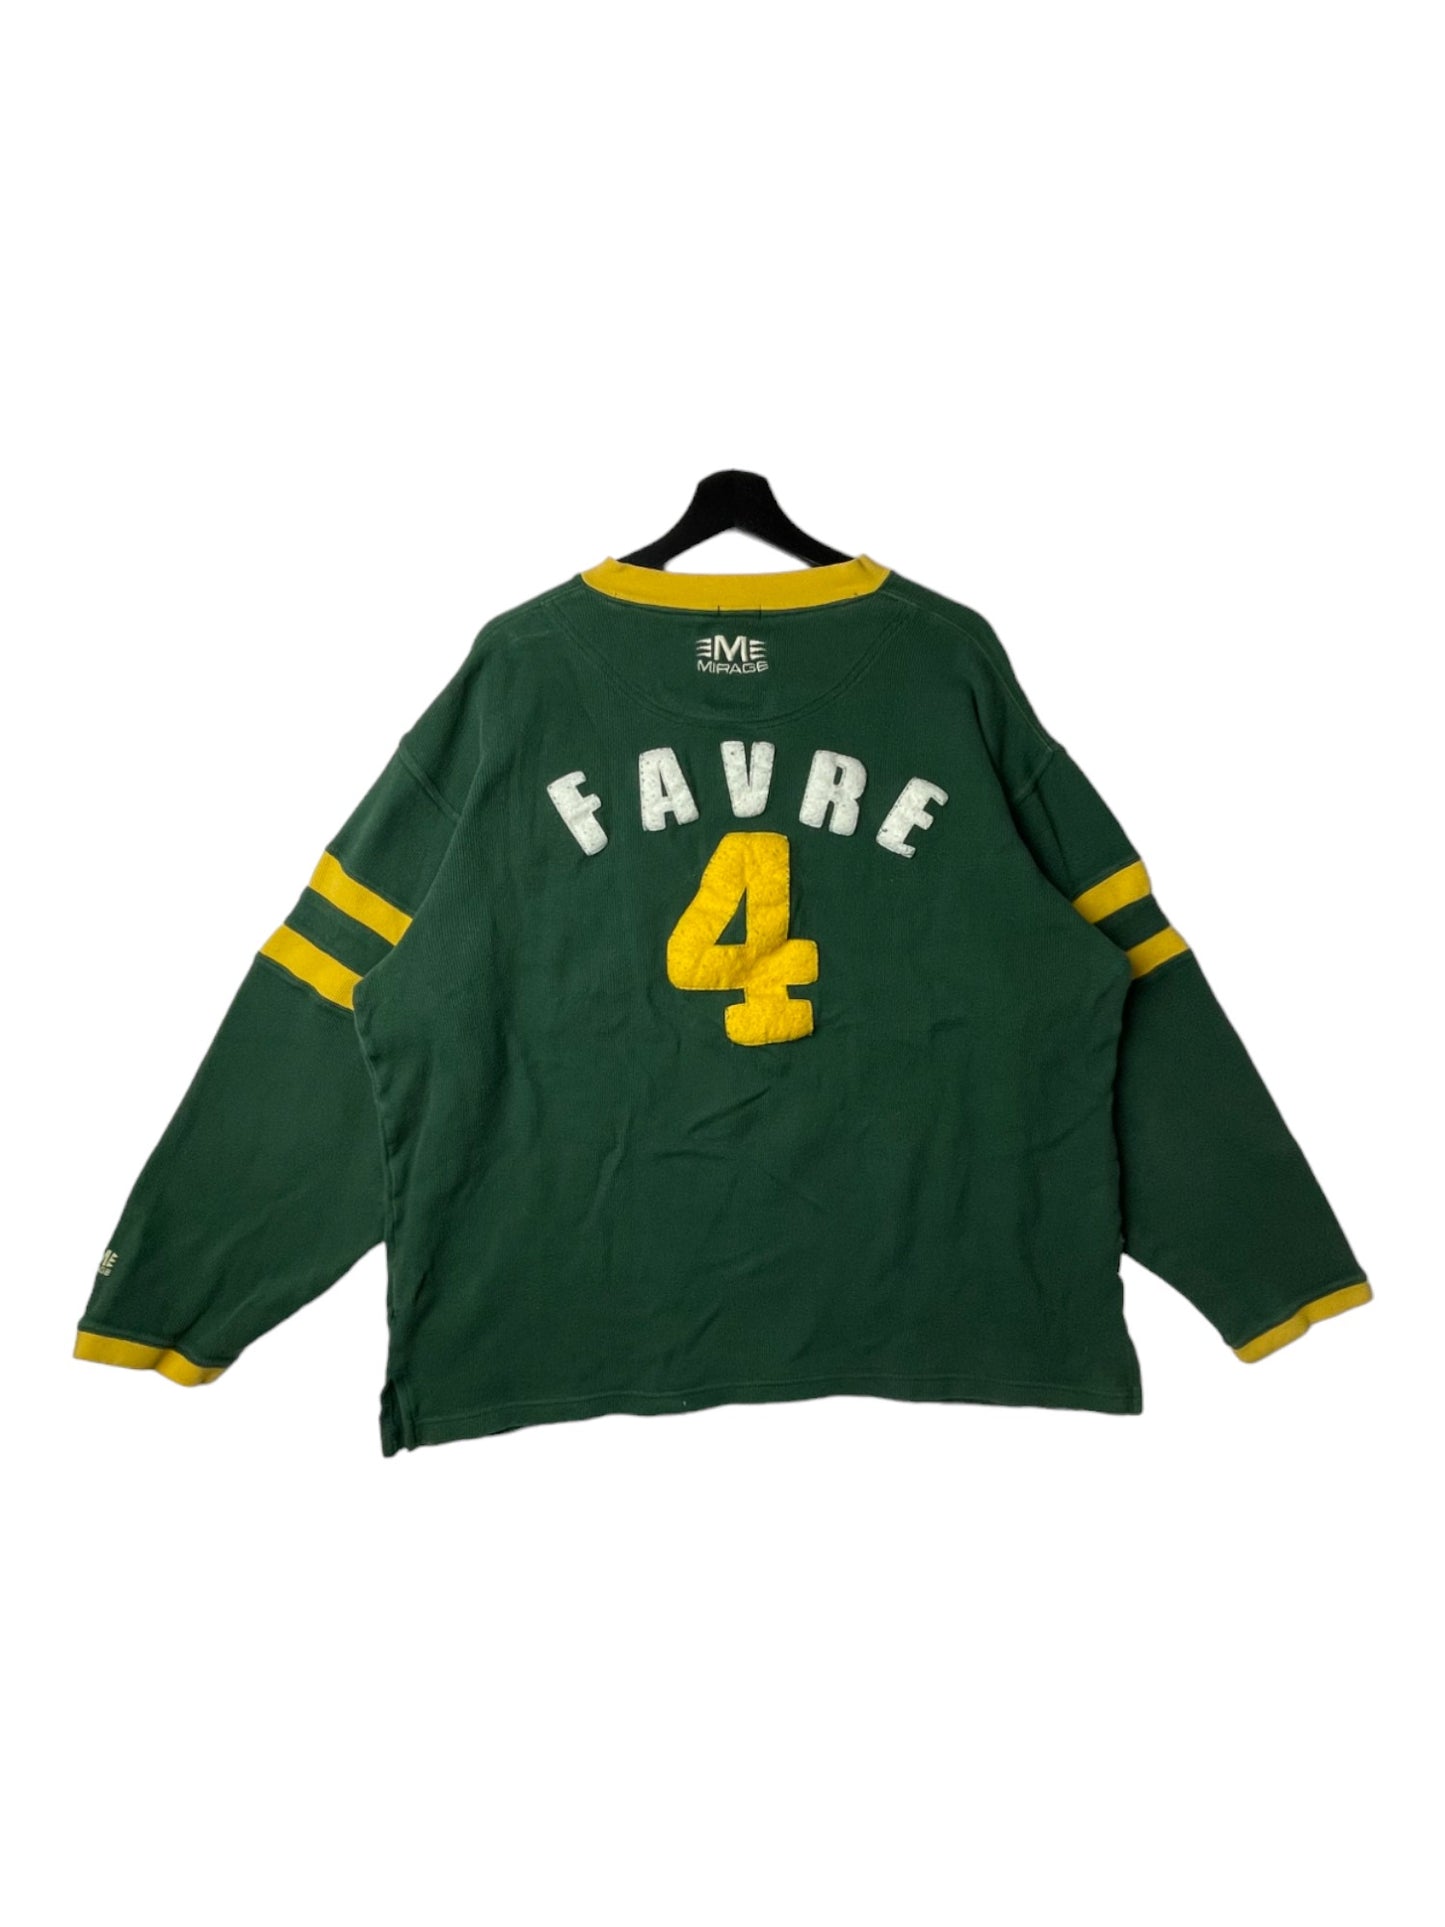 Long Sleeve Packers Favre